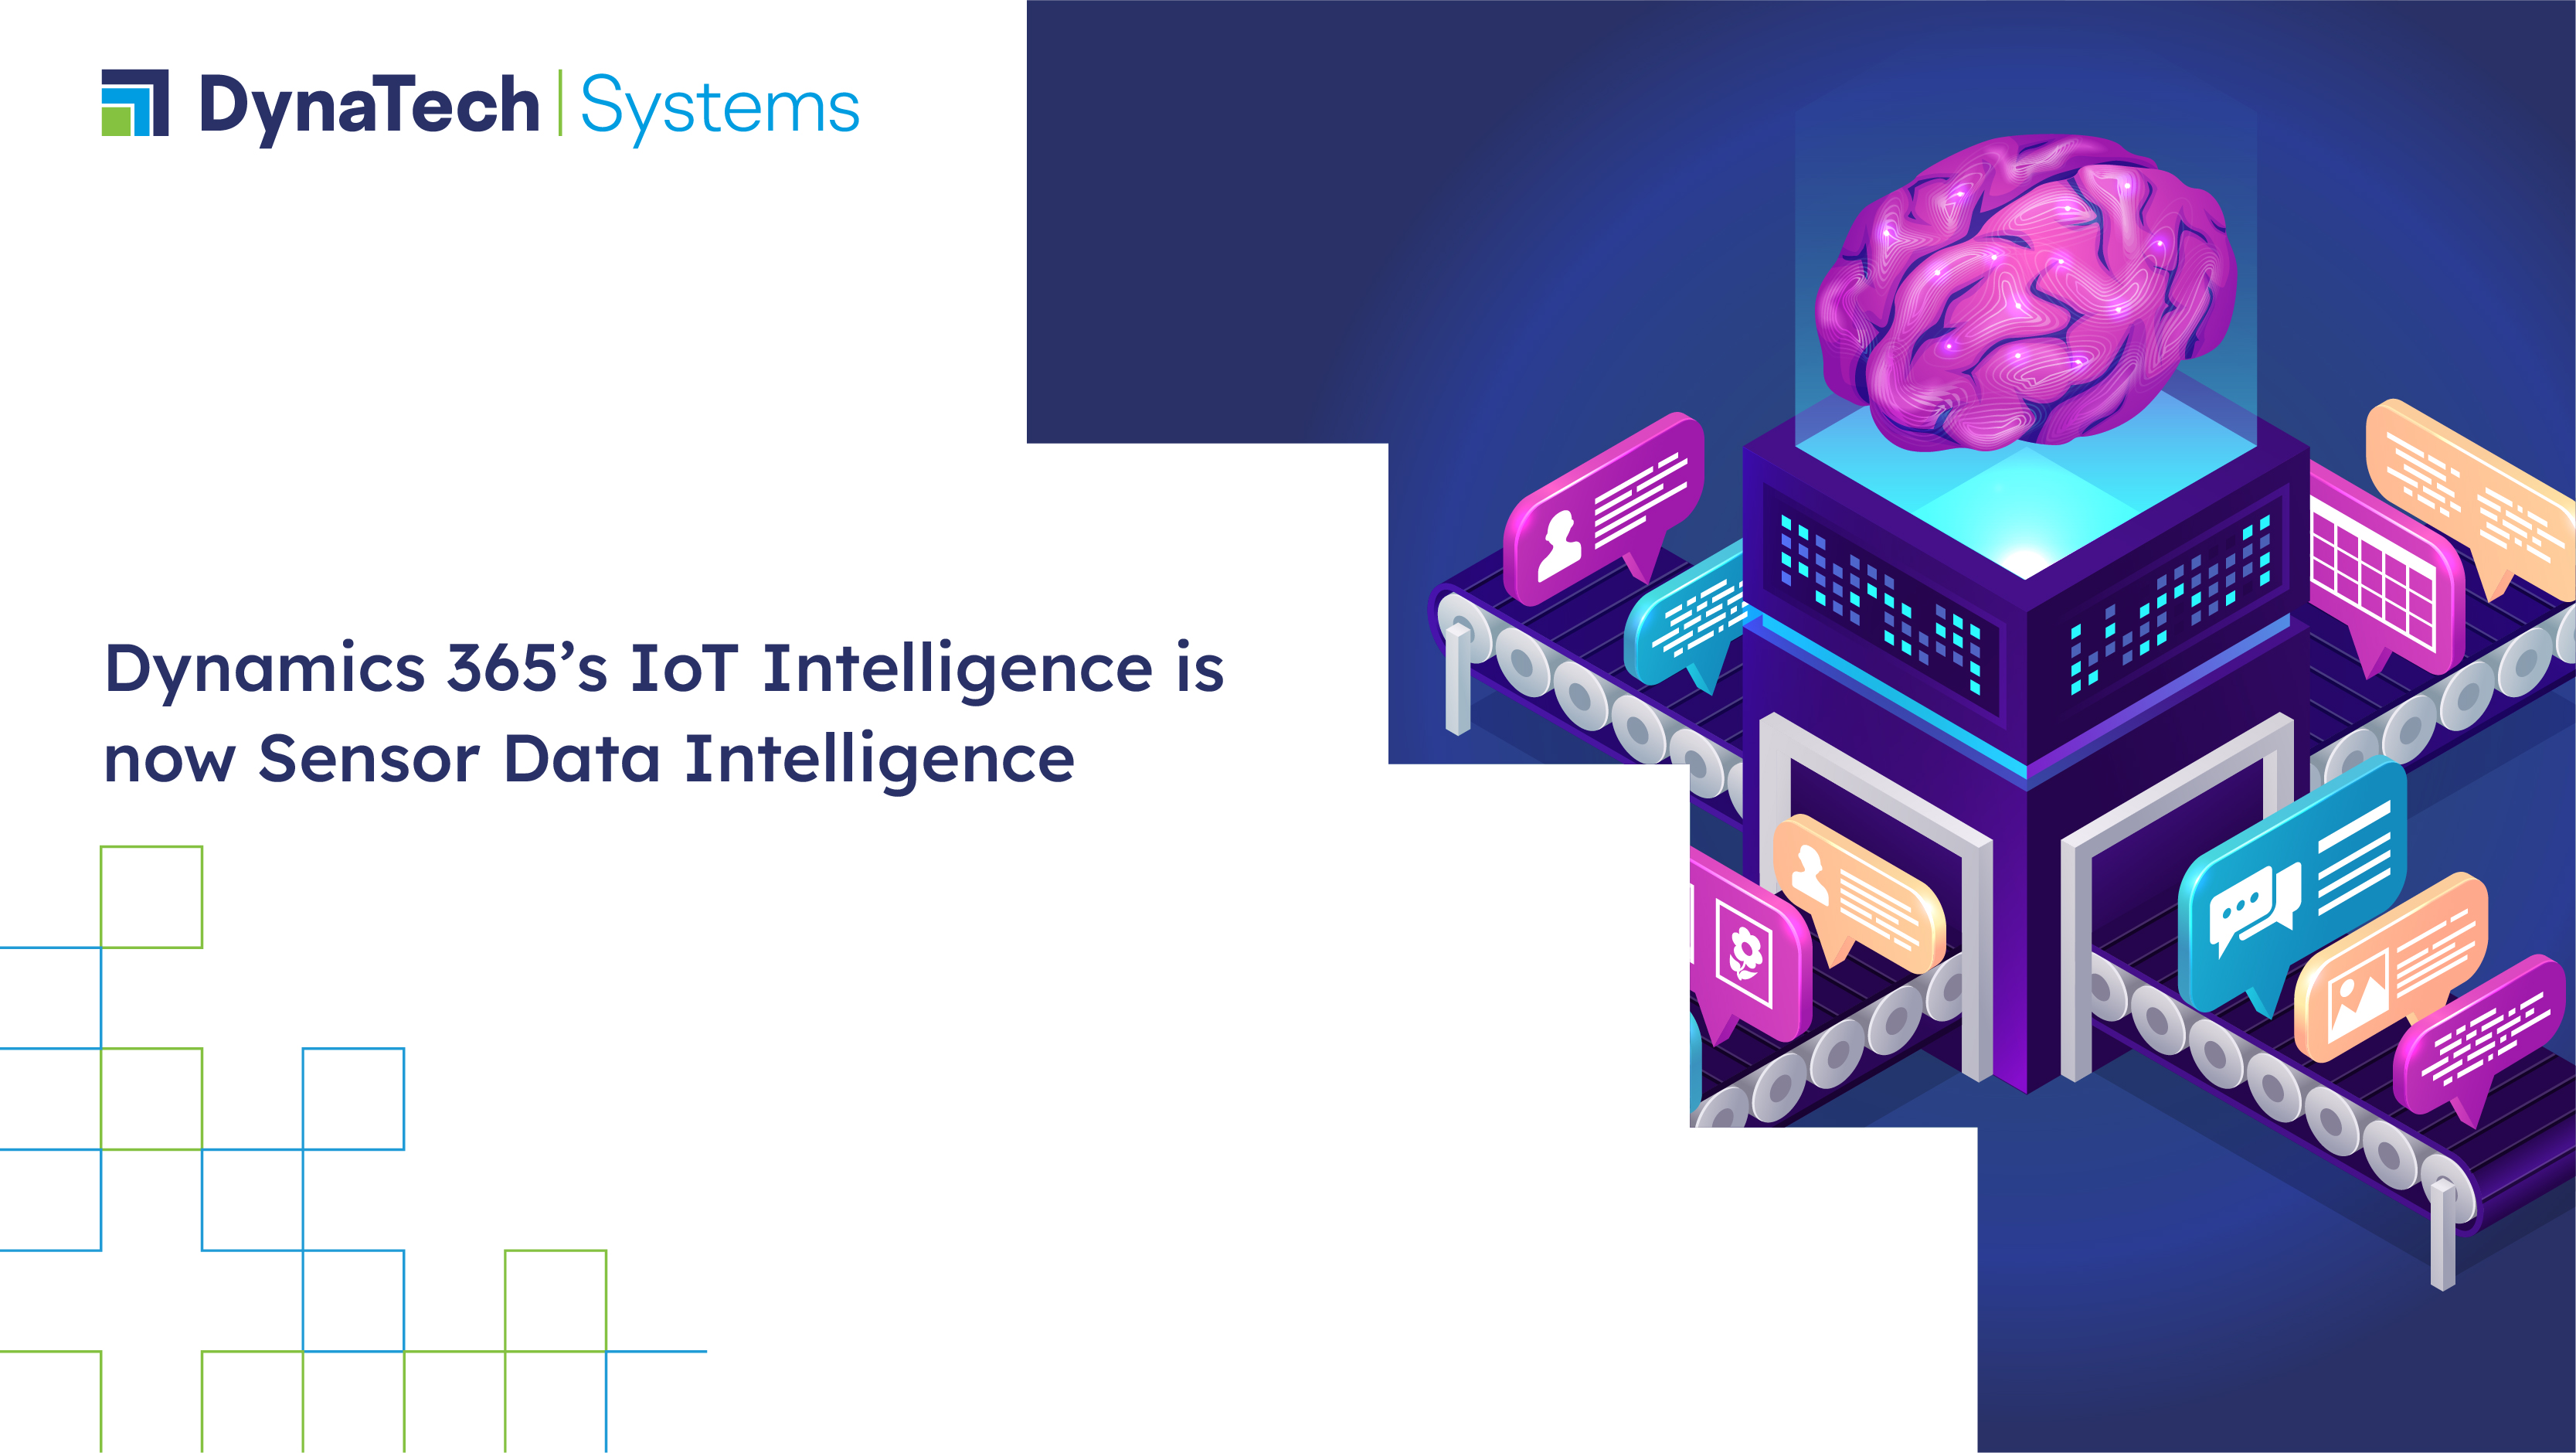 Microsoft Dynamics 365’s IoT Intelligence is now Sensor Data Intelligence